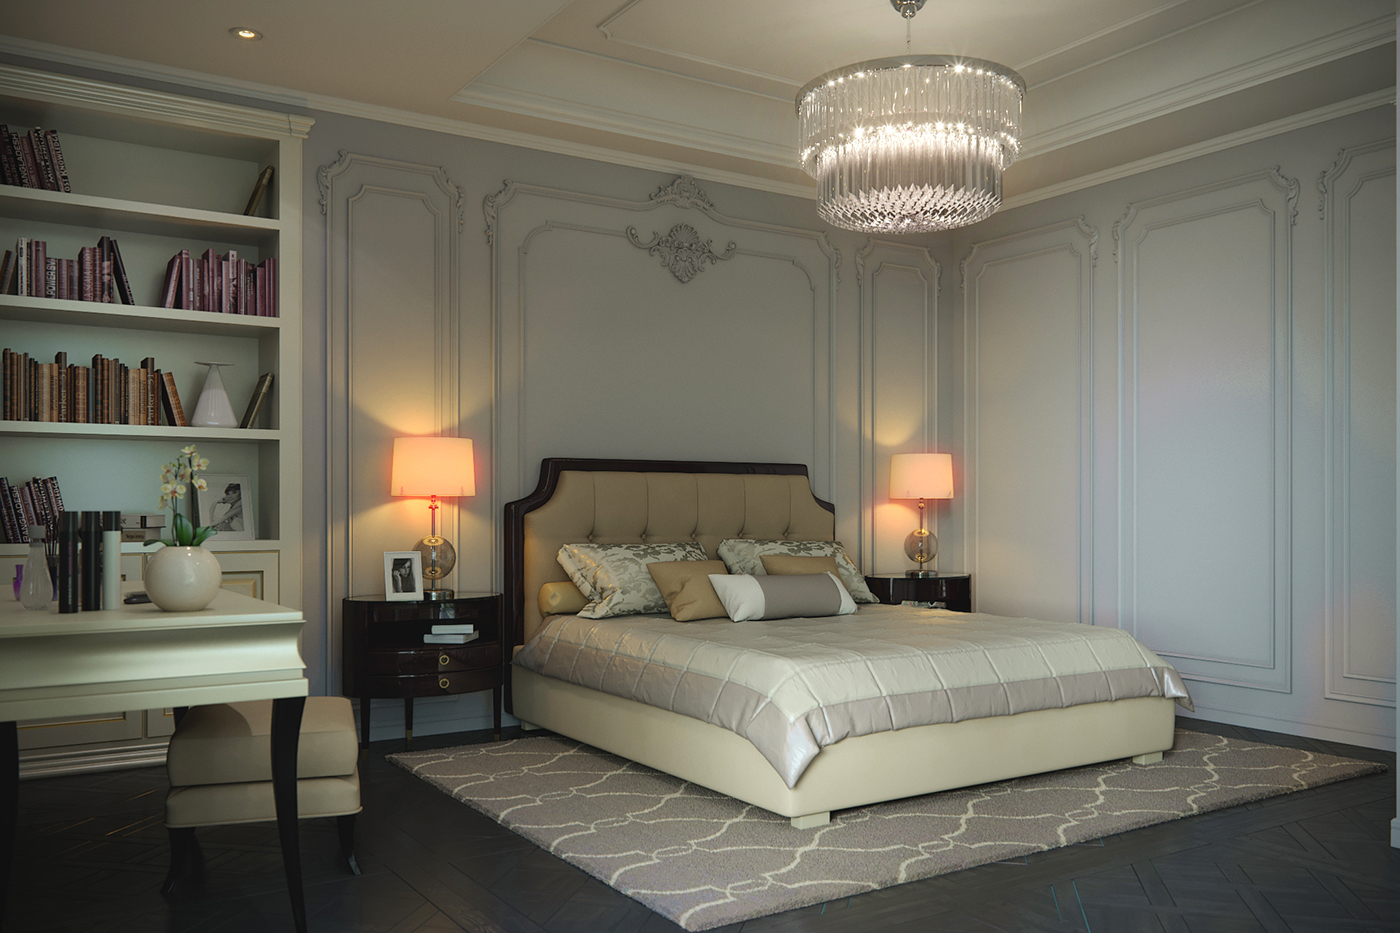 visualization Bedrooms design Interior визуализация интерьер дизайн спальня followme likes